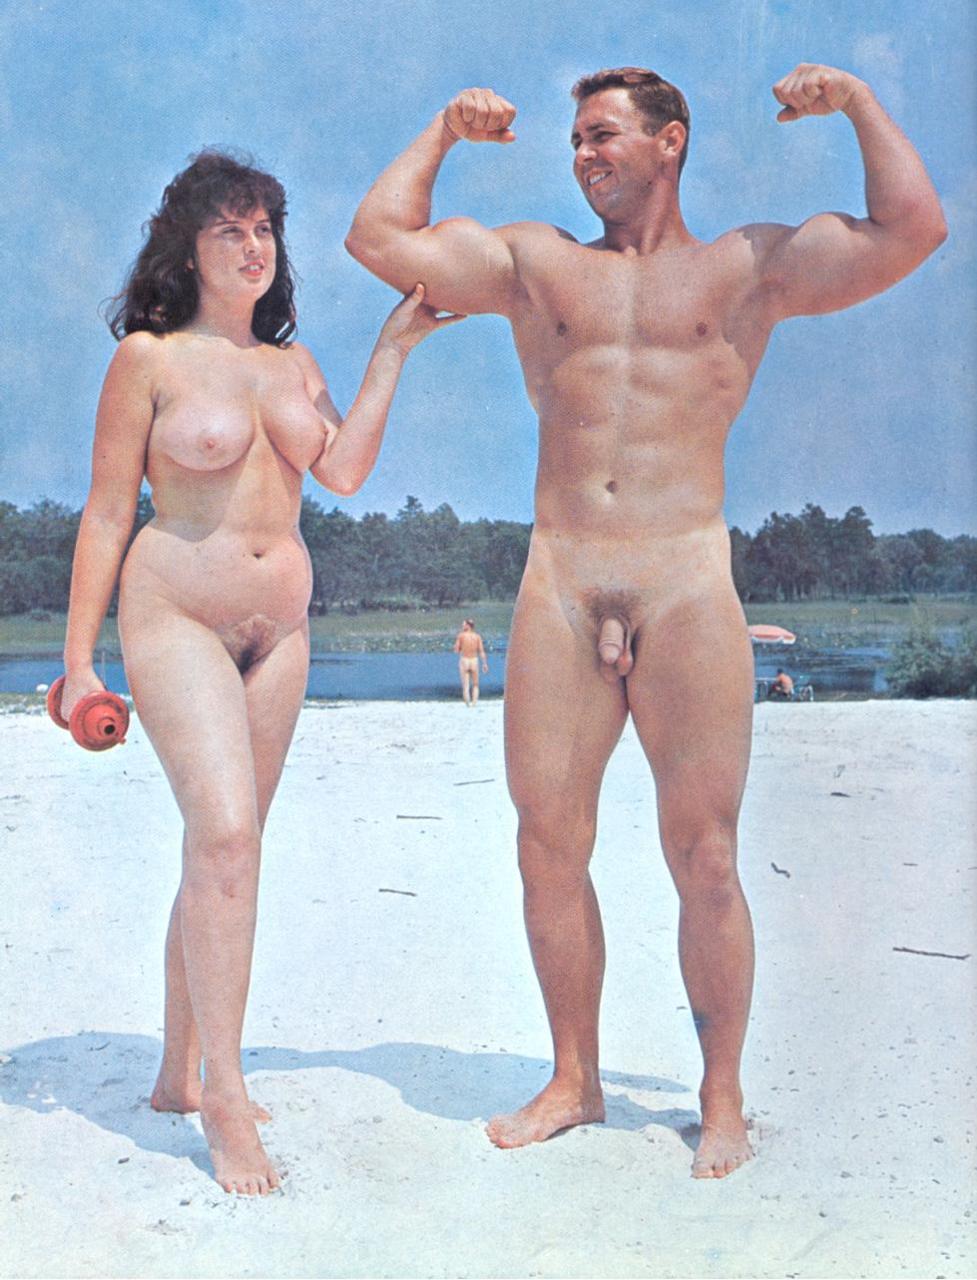 https://www.nudismlife.com/galleries/nudists_and_nude/nudist_cabana/nudist_cabana_049.jpg